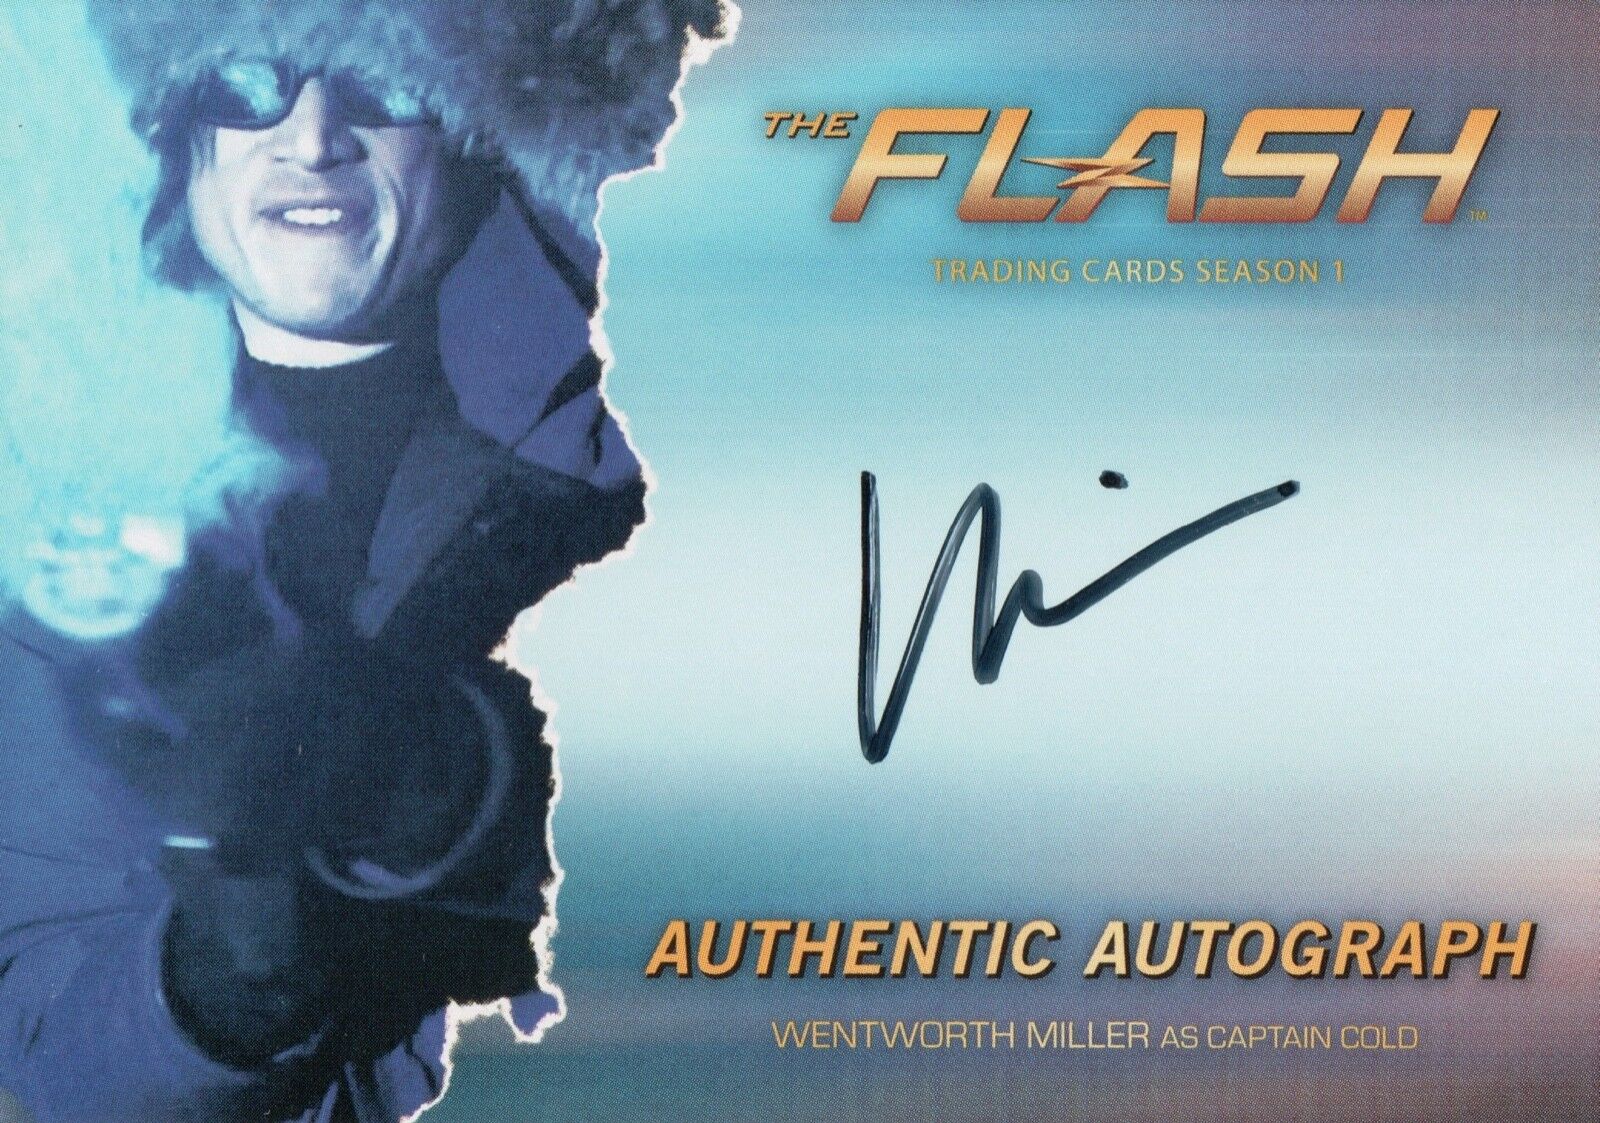 The Flash Season 1, Wentworth Miller (Captain Cold) Autograph Card WM2